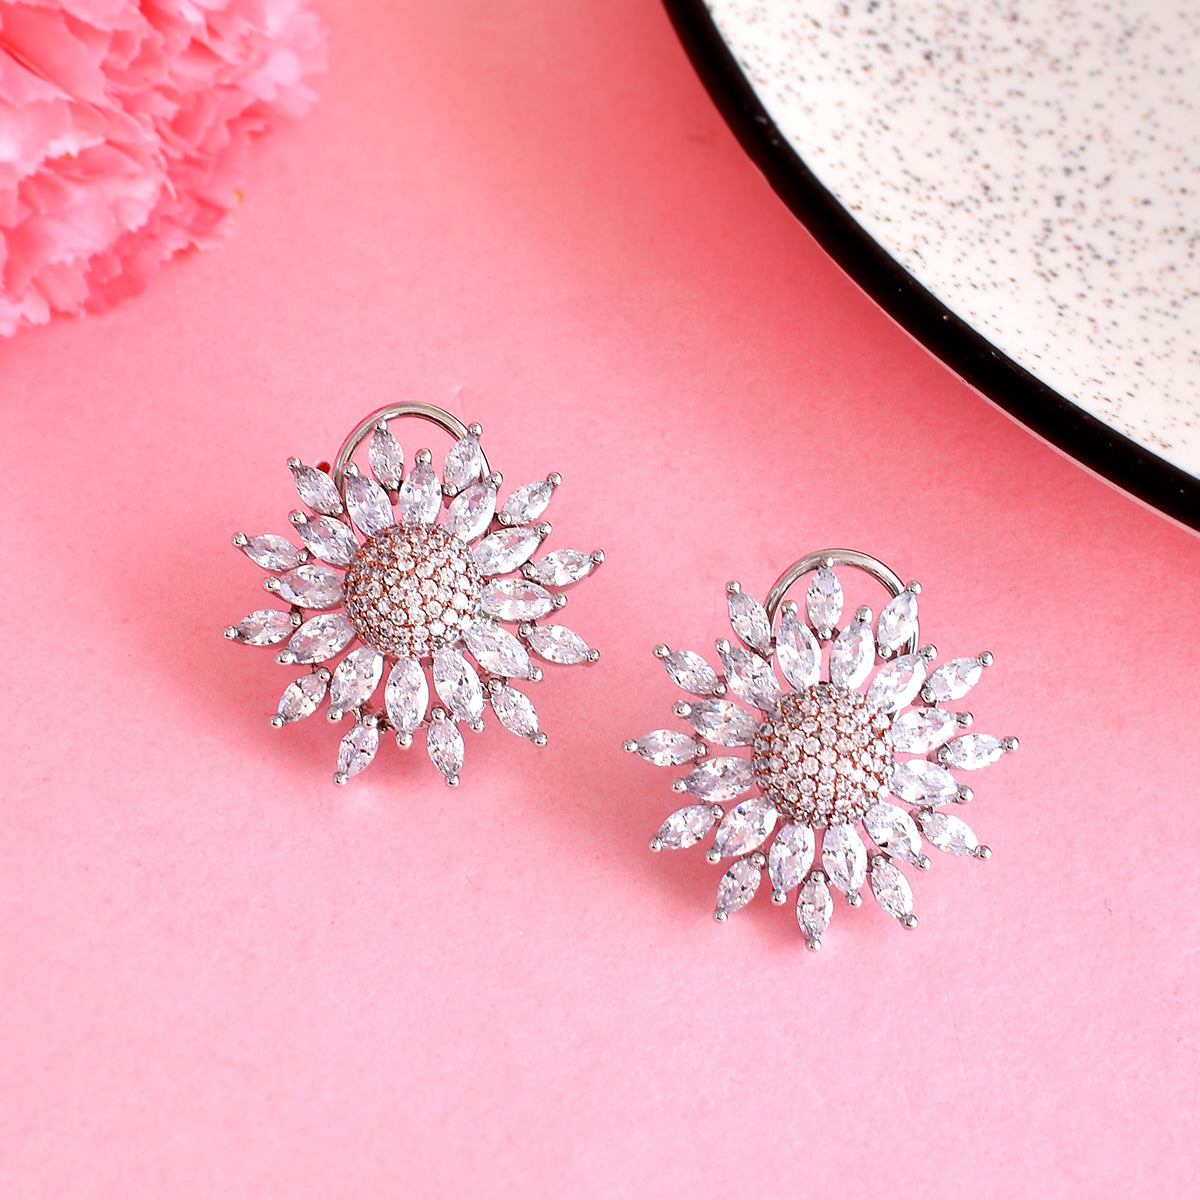 Sparkling Elegance Floral Round Cut CZ Earrings